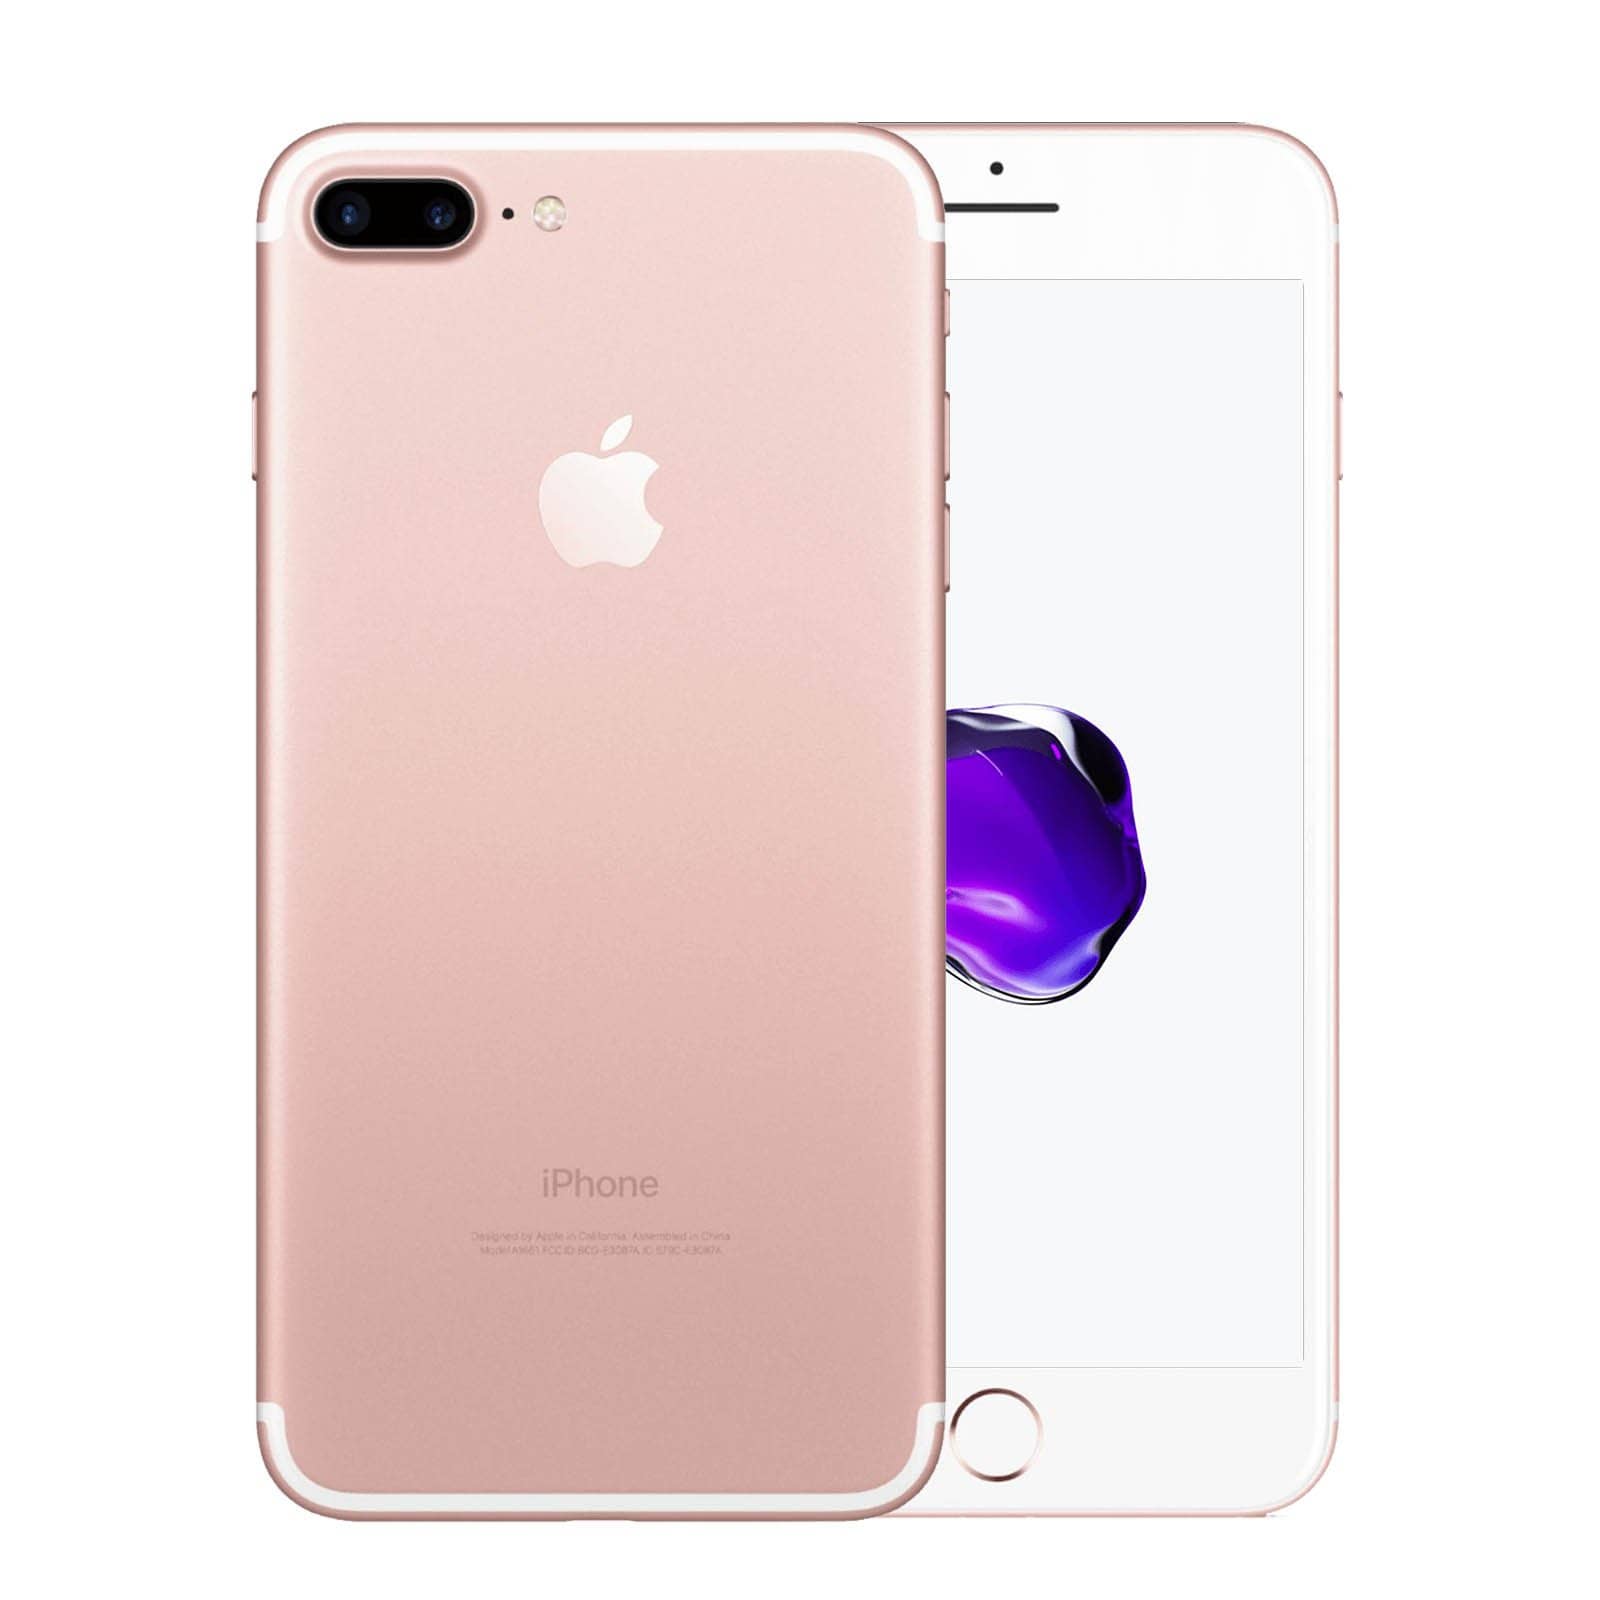 Apple iPhone 7 Plus 256GB Rose Gold Very Good - Unlocked 256GB Rose Gold Very Good